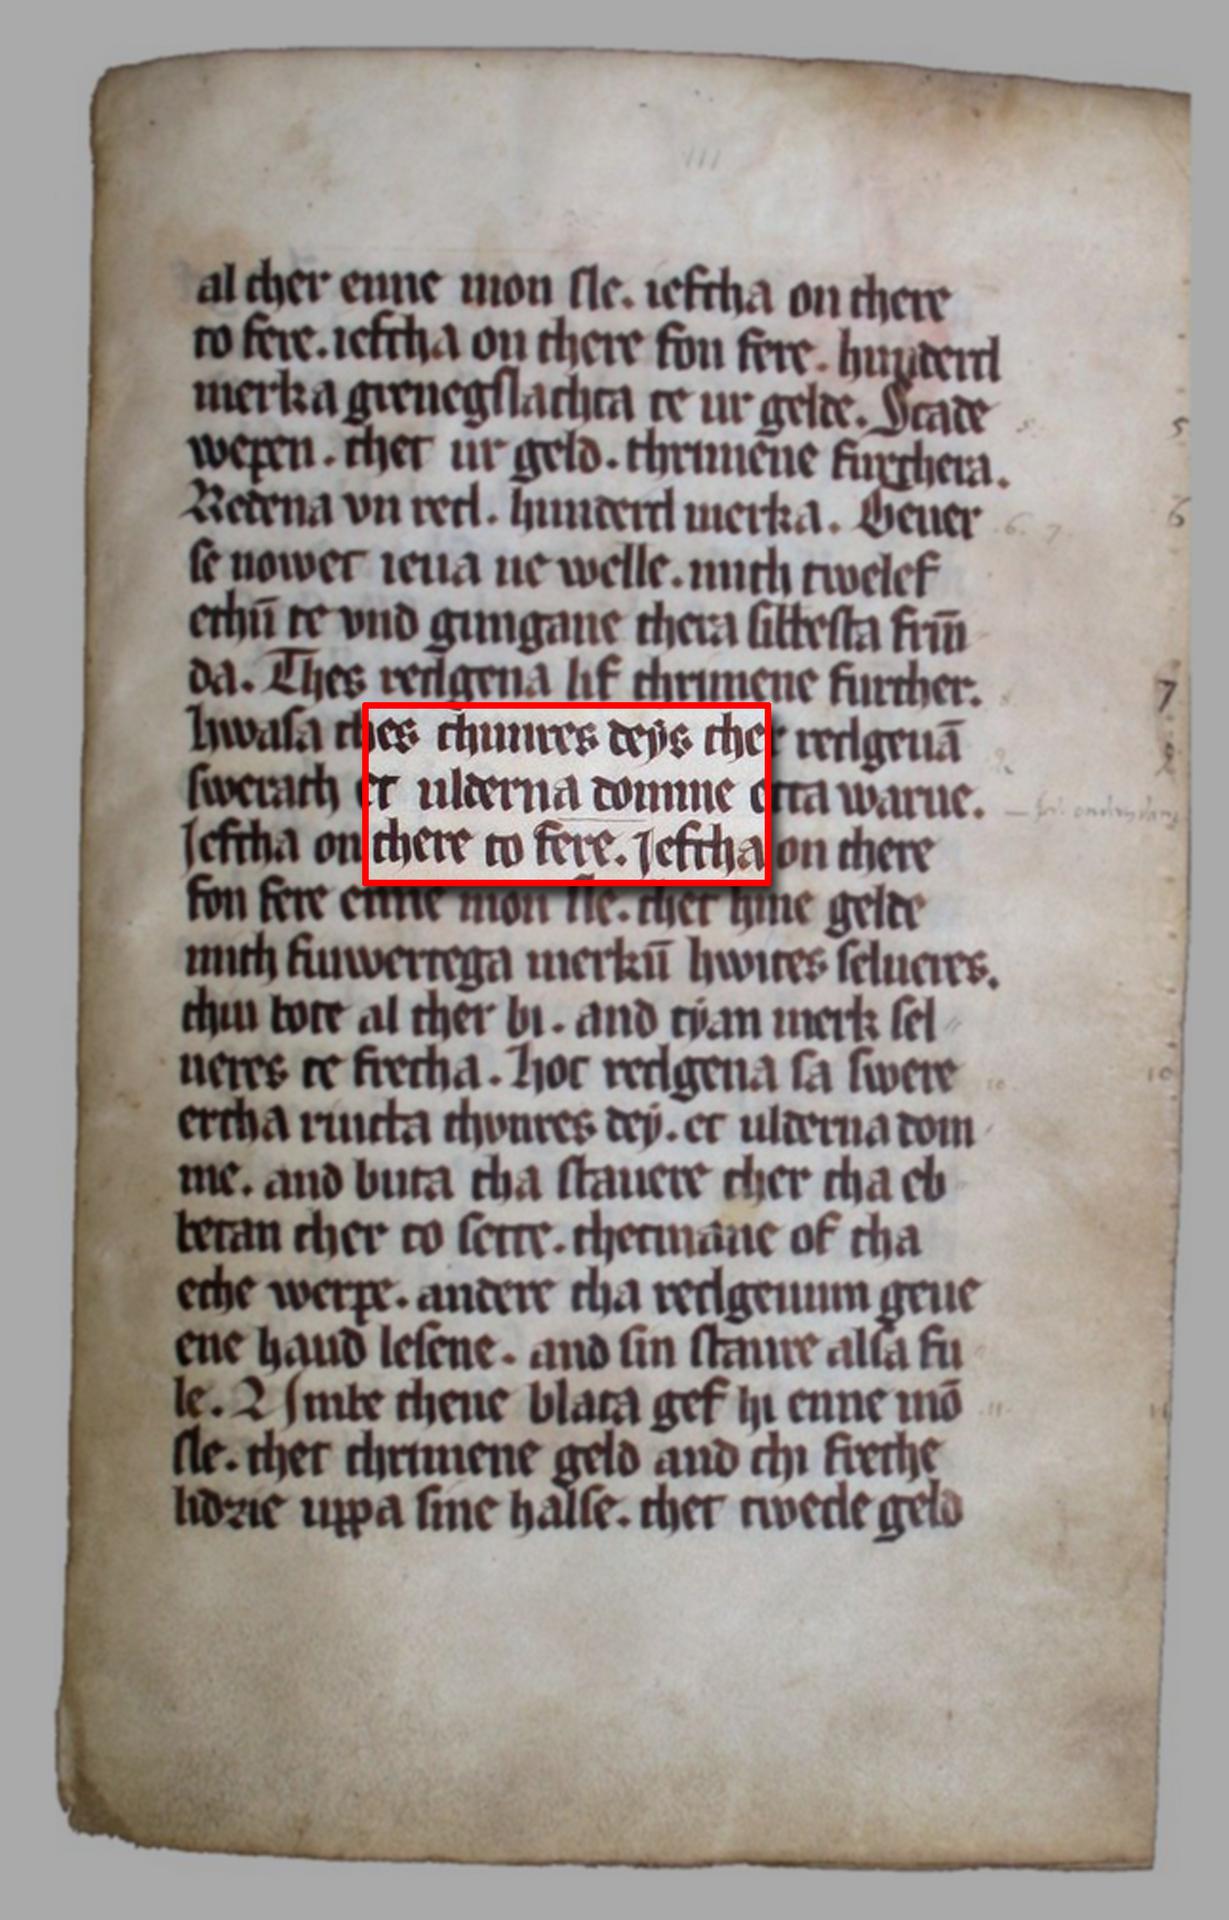 Uldernadomme in codex anno 1252